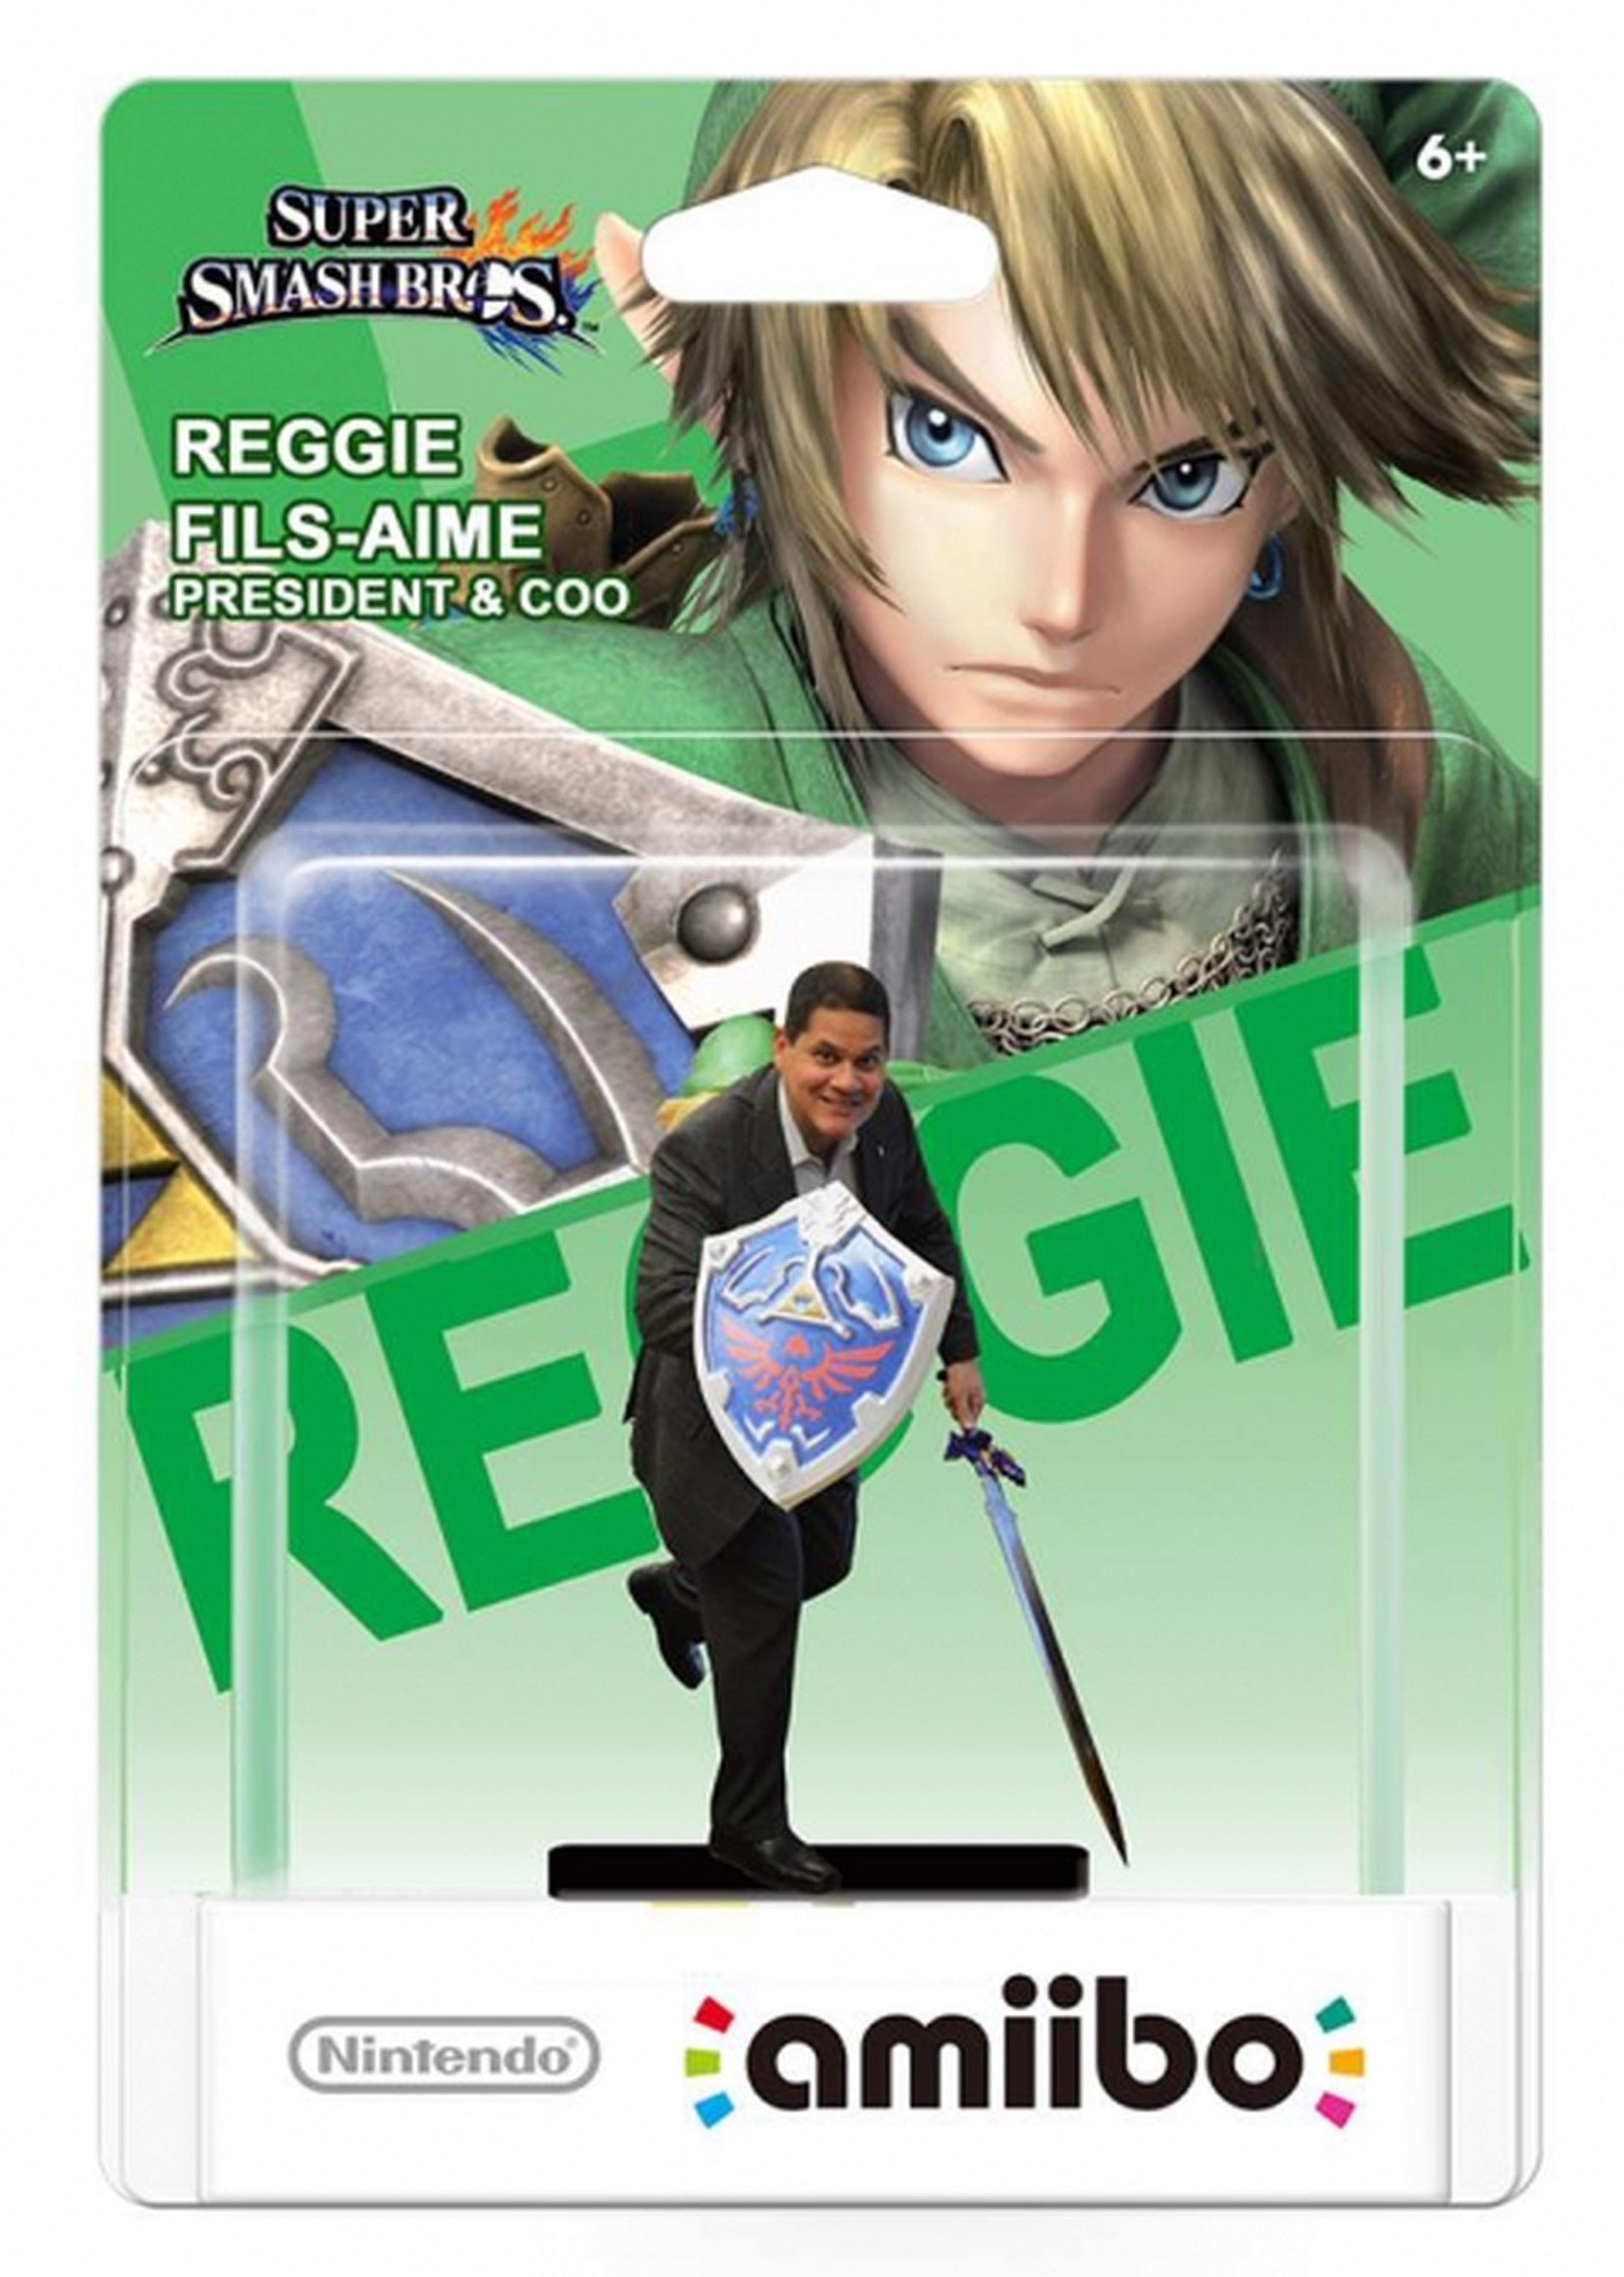 Nintendo bromea con un nuevo amiibo de... ¡Reggie Fils-Aime!